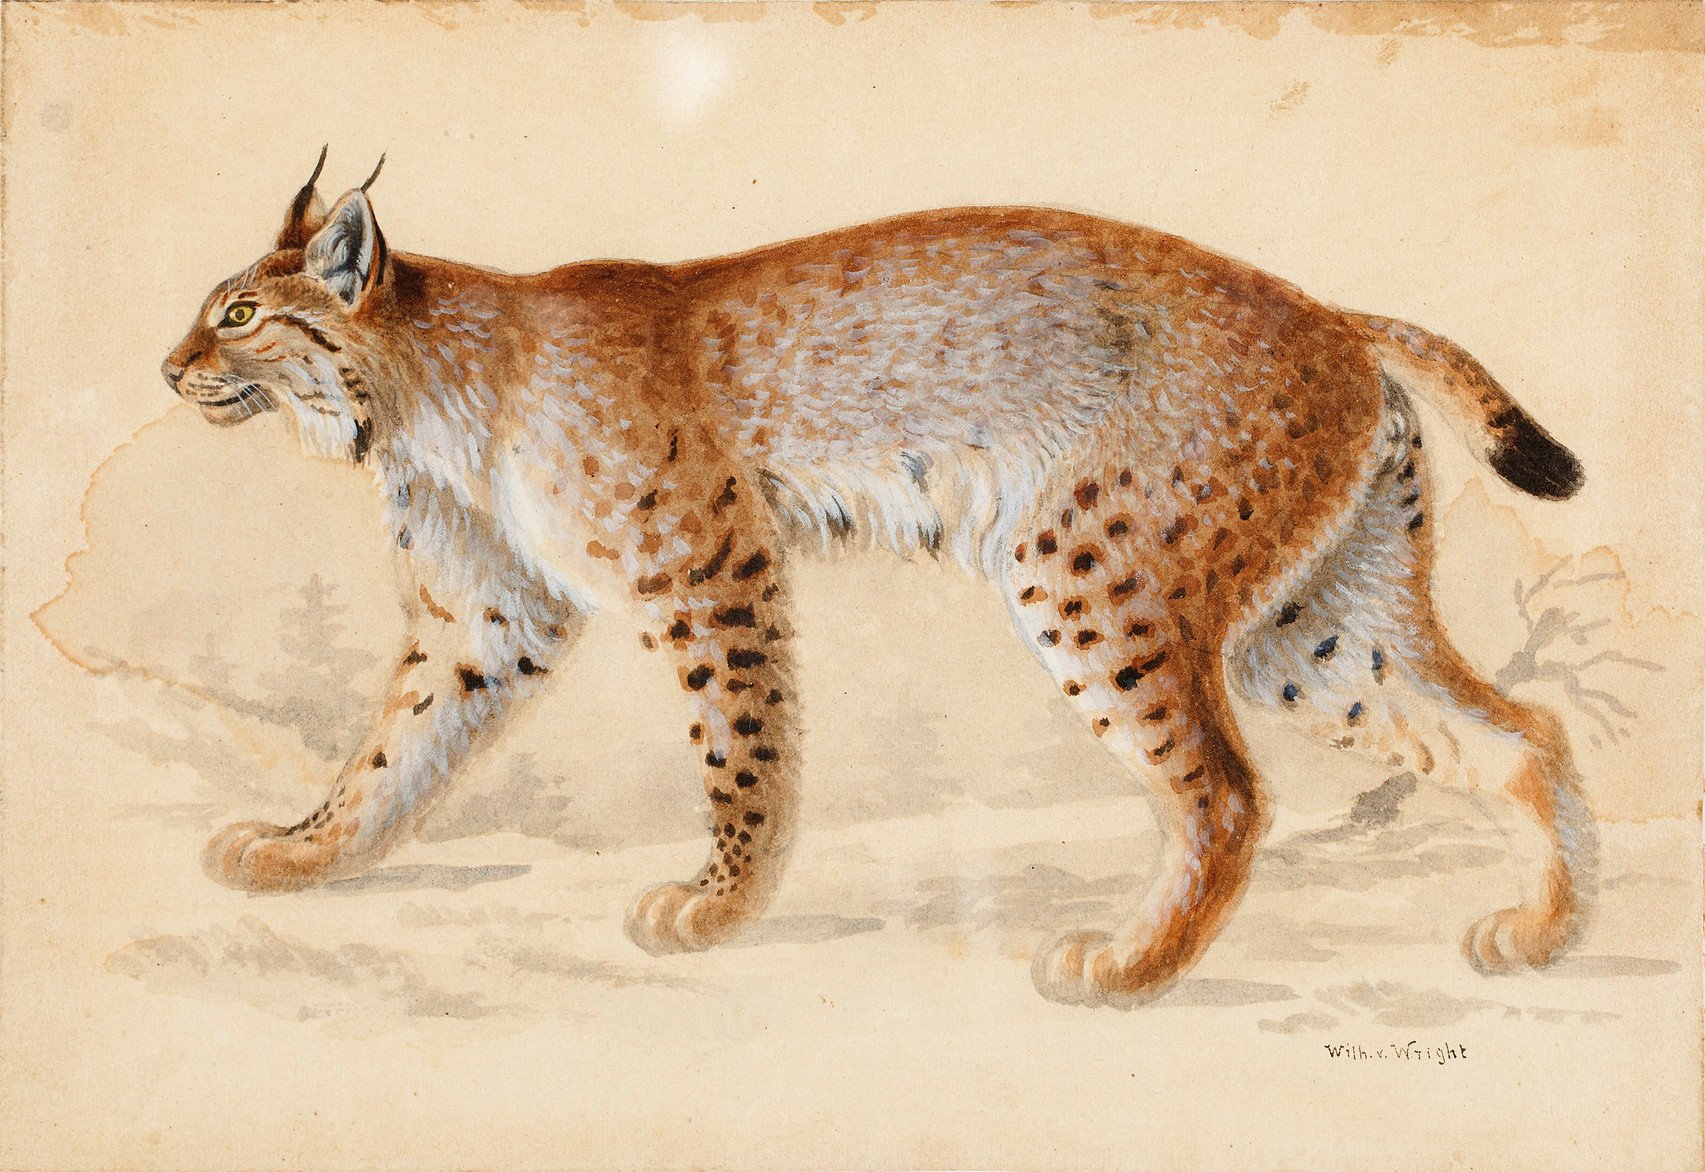 A side profile portrait of a lynx walking on a flat surface.